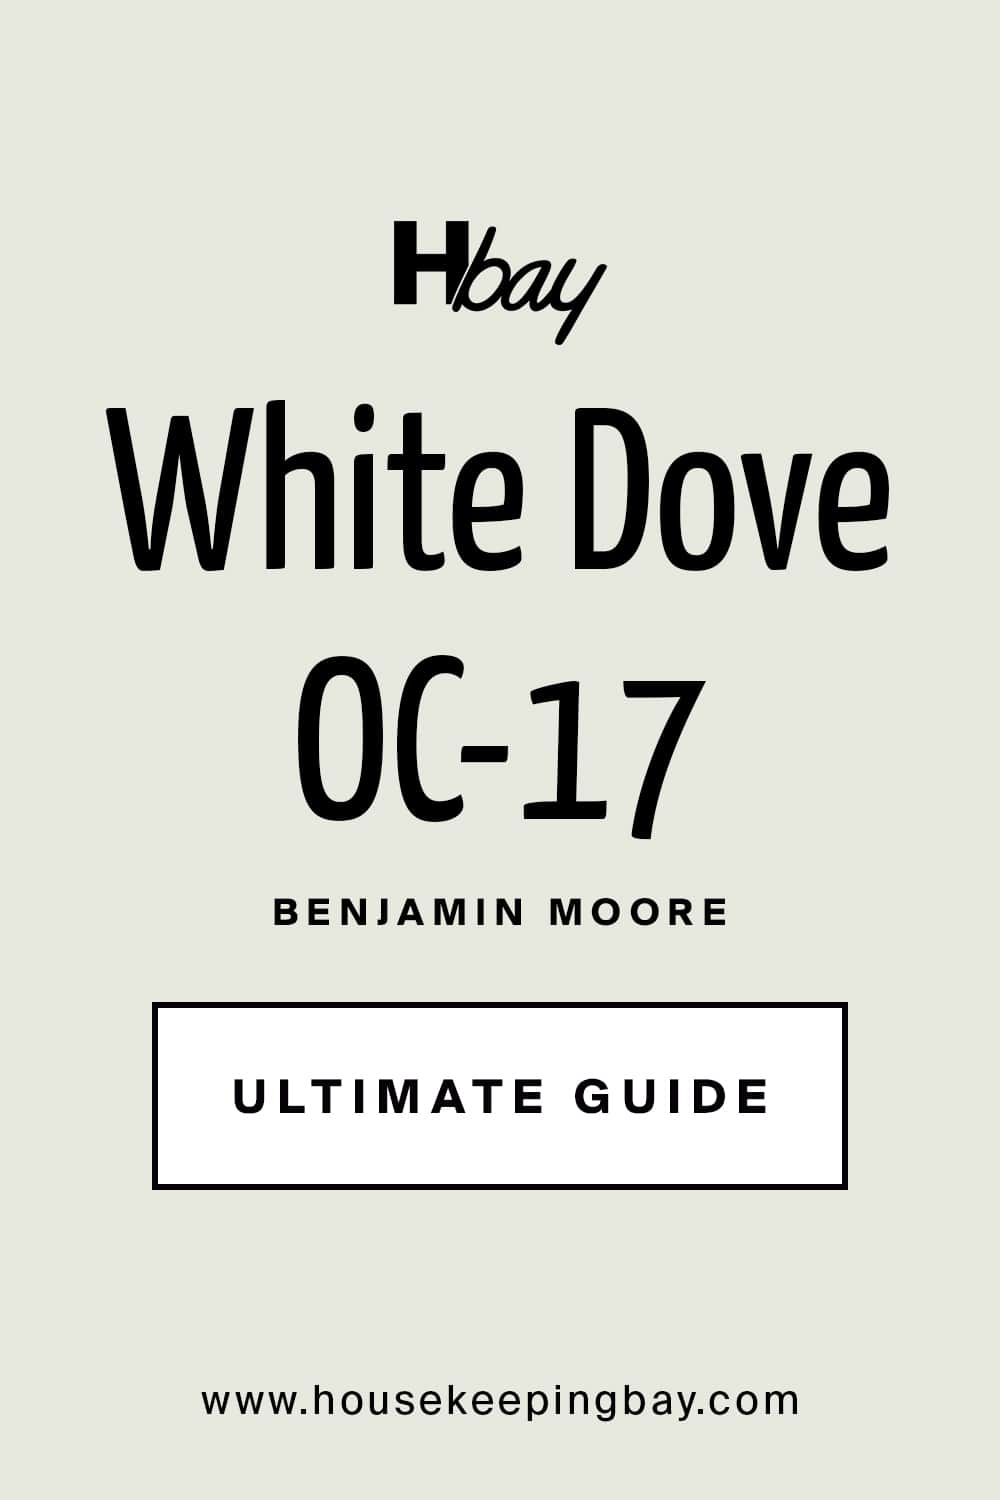 White Dove OC 17 by Benjamin Moore Ultimate Guide